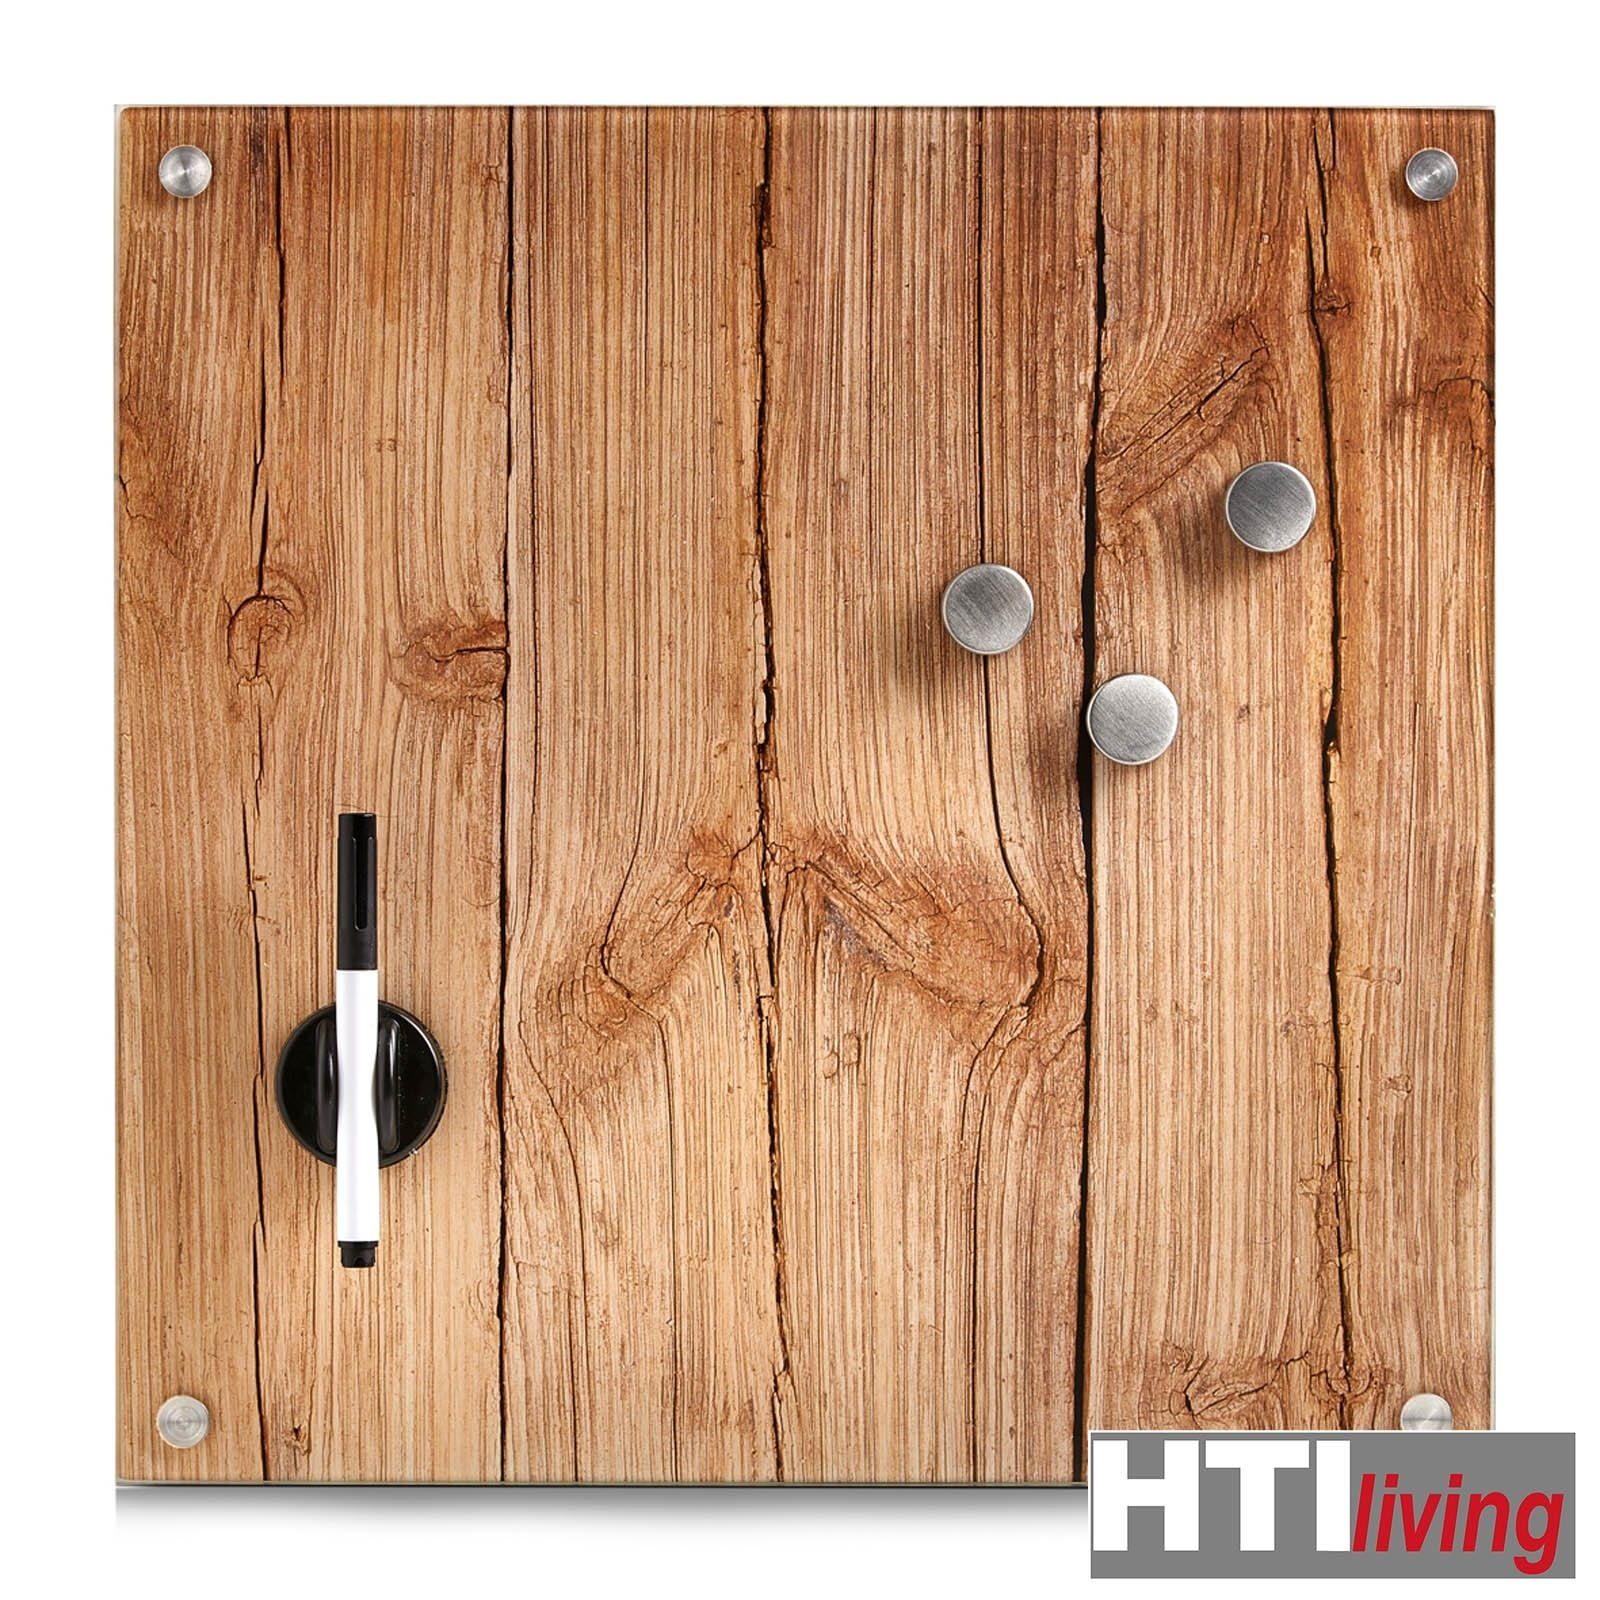 Magnetboard Memoboard Memoboard Magnettafel HTI-Living Wood, Schreibboard Schreibtafel Pinnwand Glas